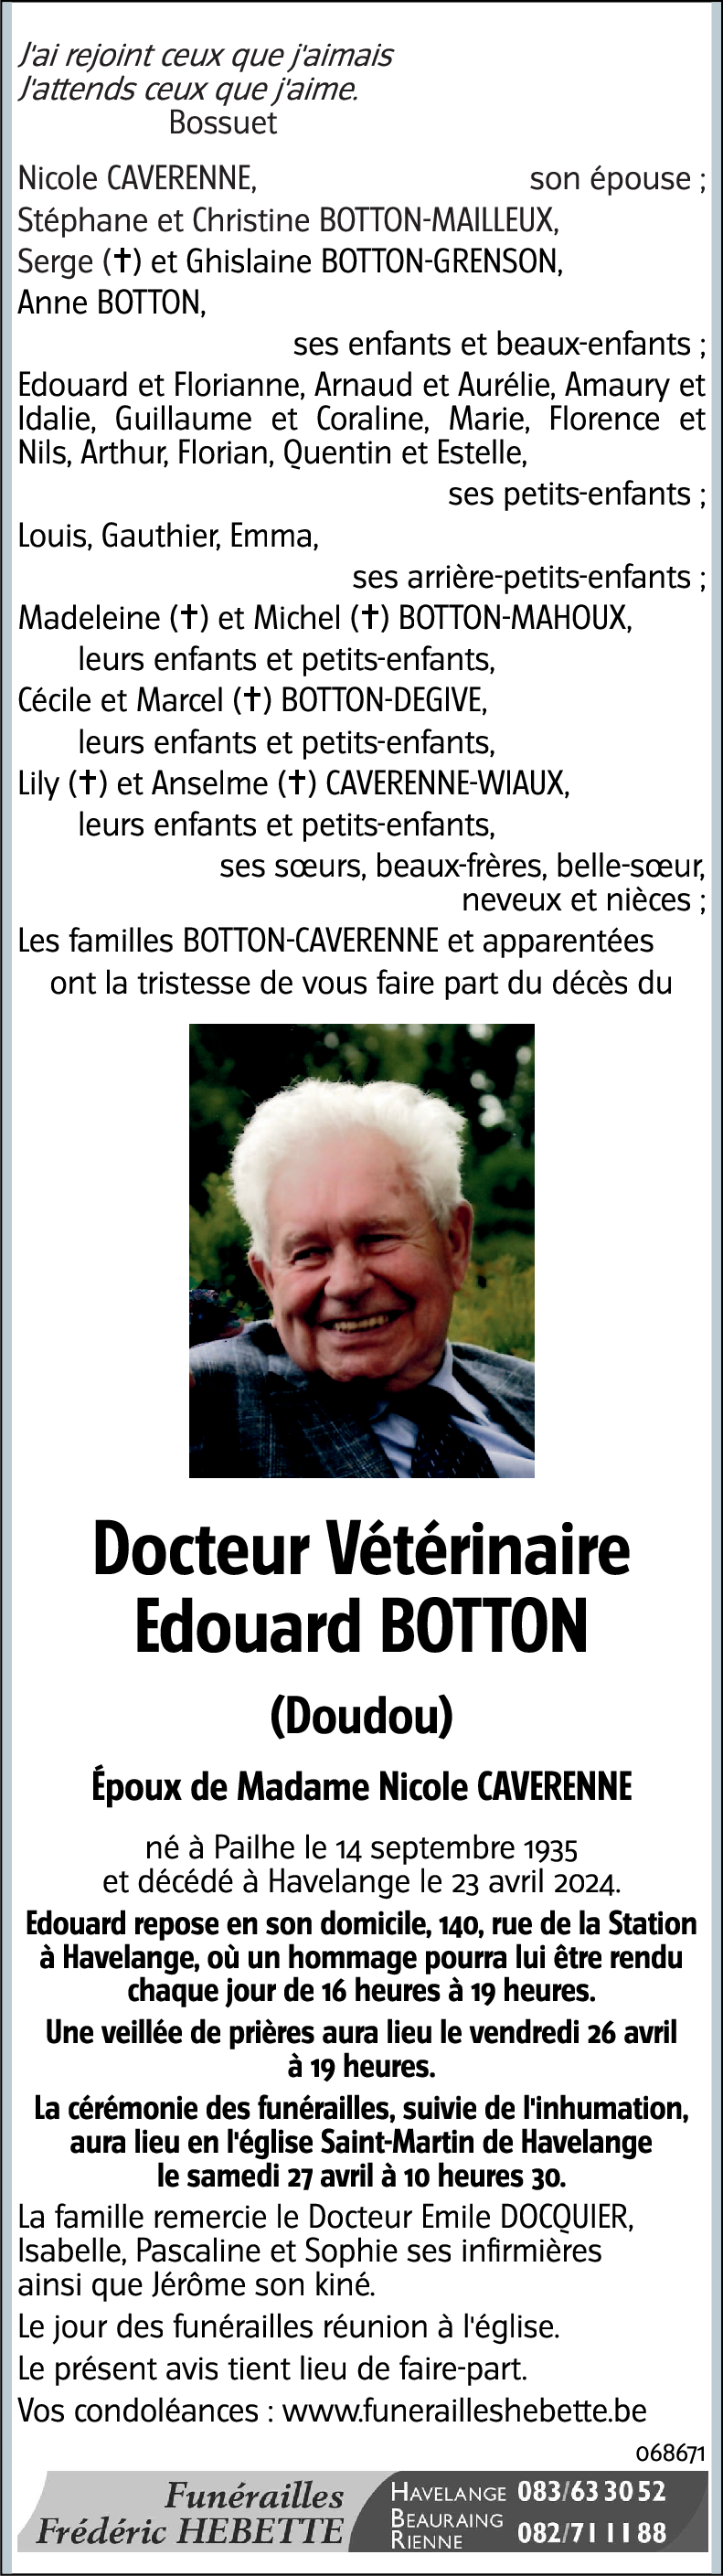 Edouard BOTTON